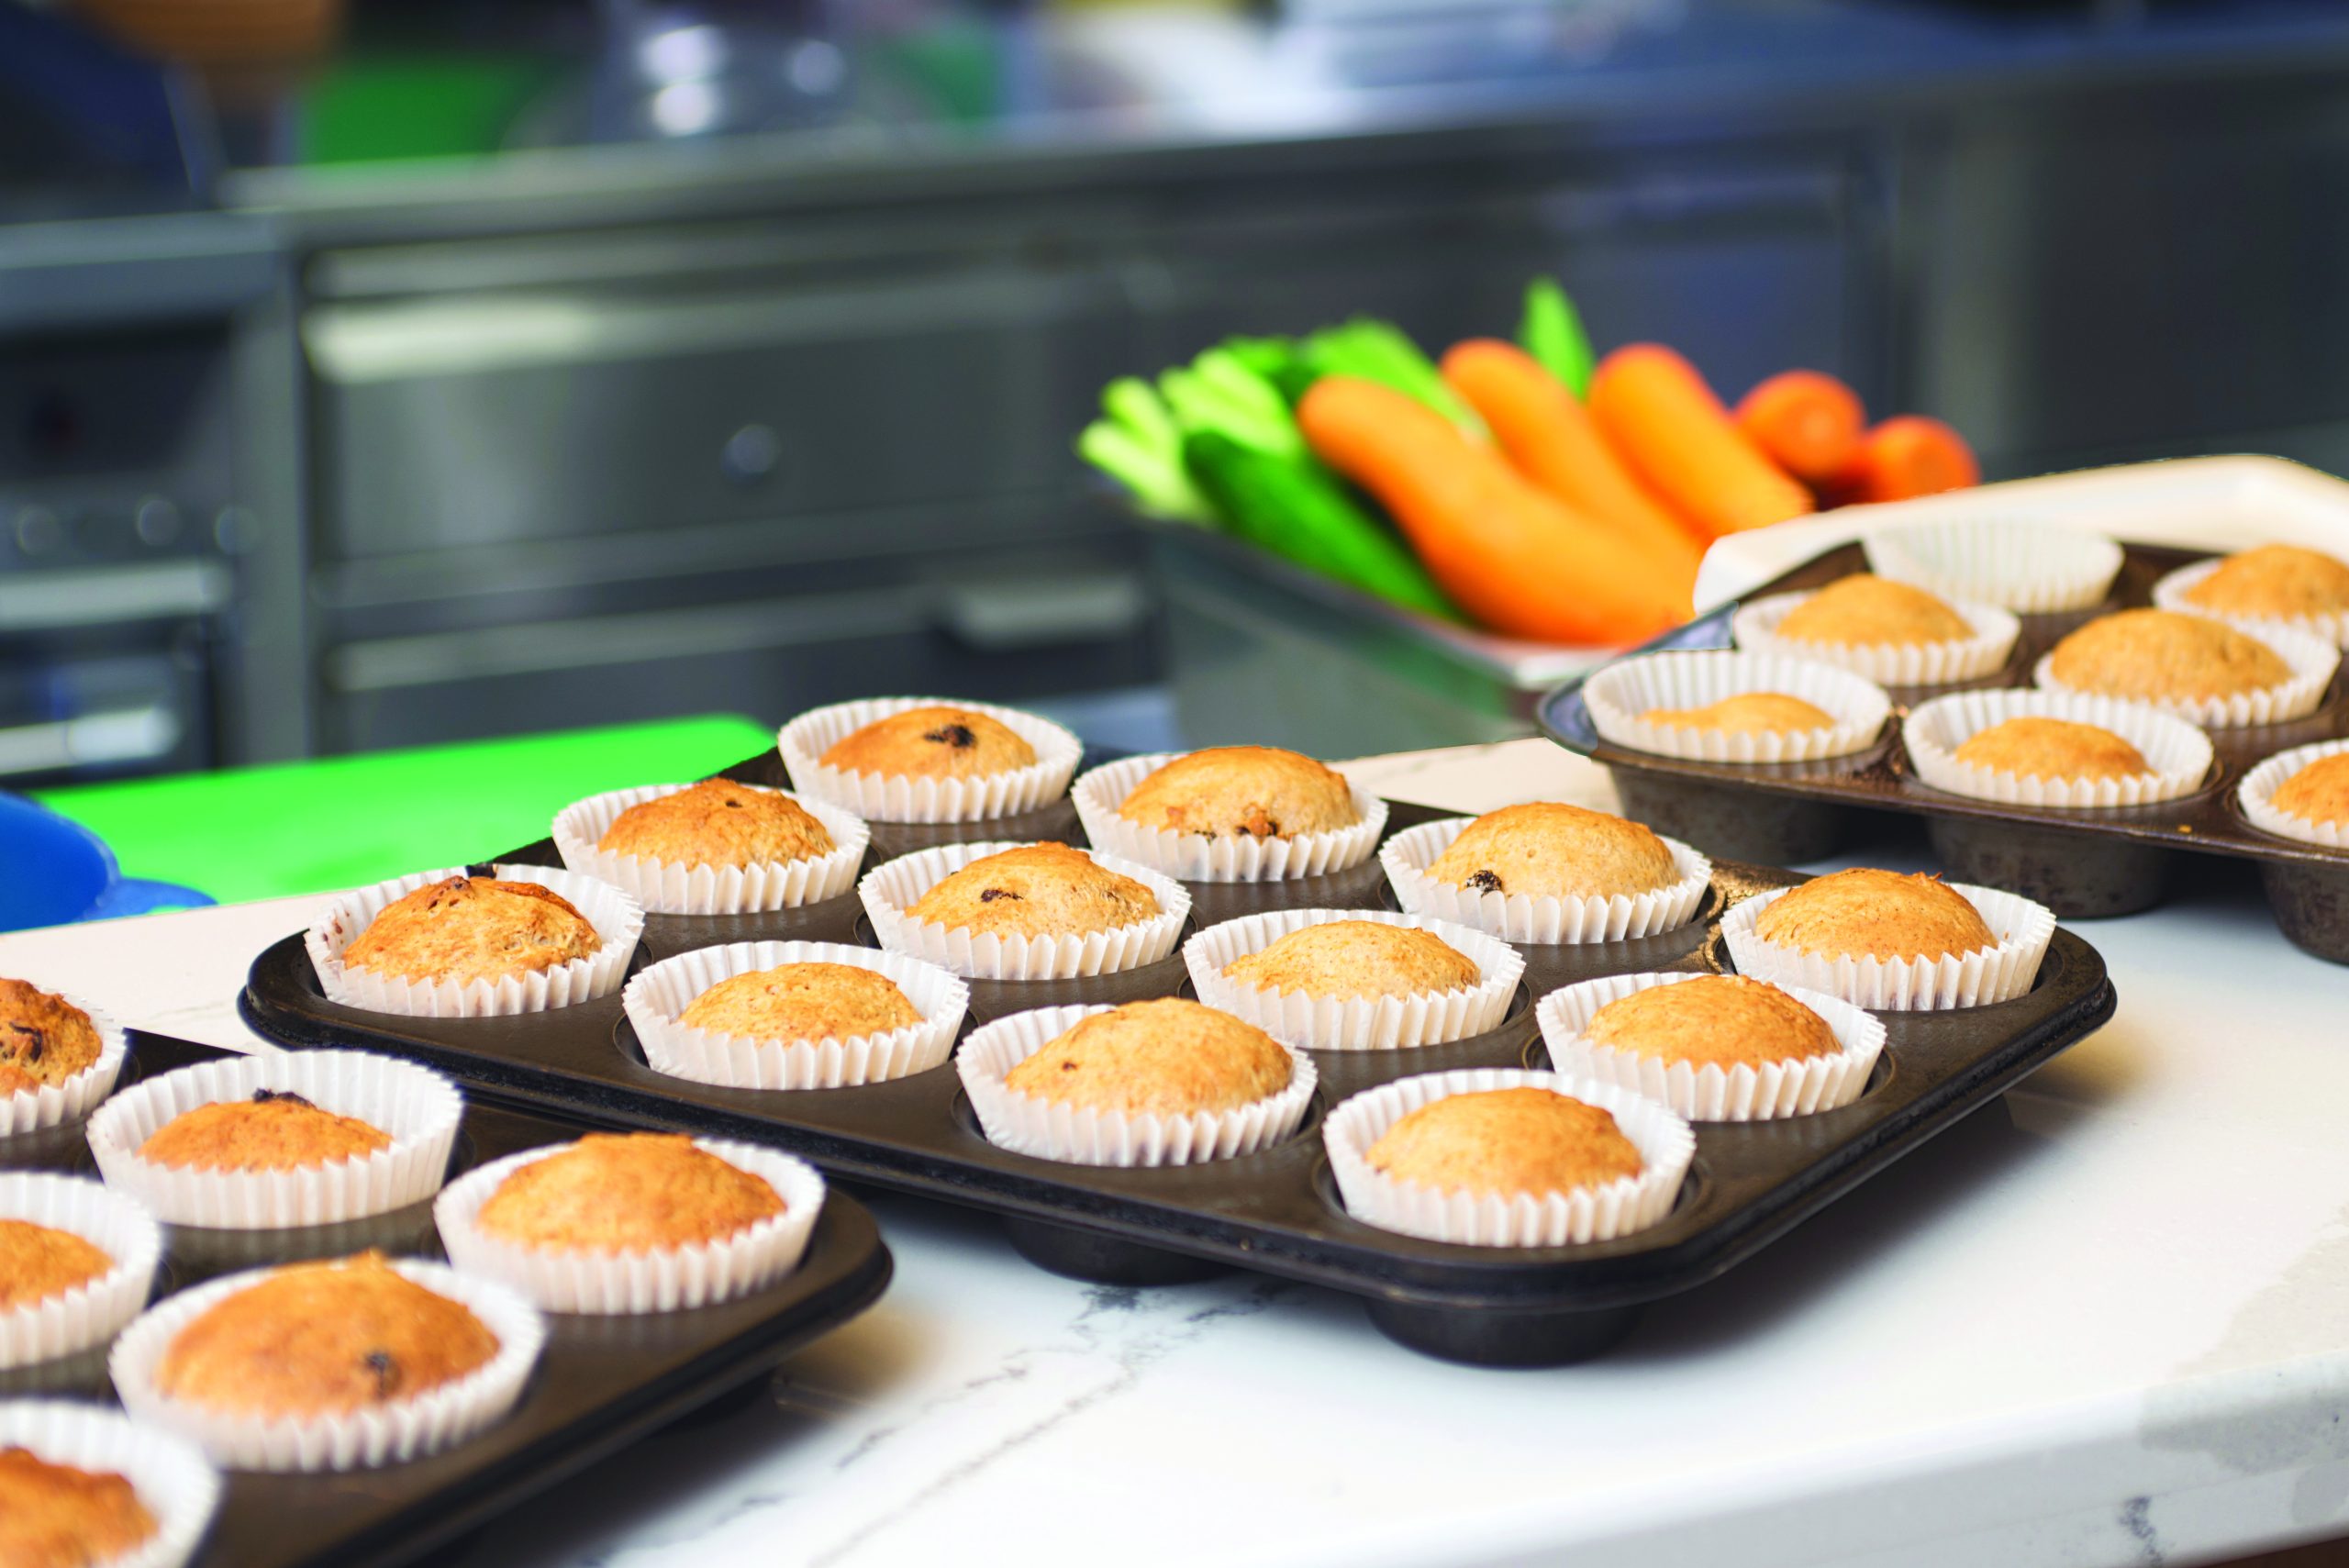 Fresh baked muffins in trays in Munro Centre kitchen.